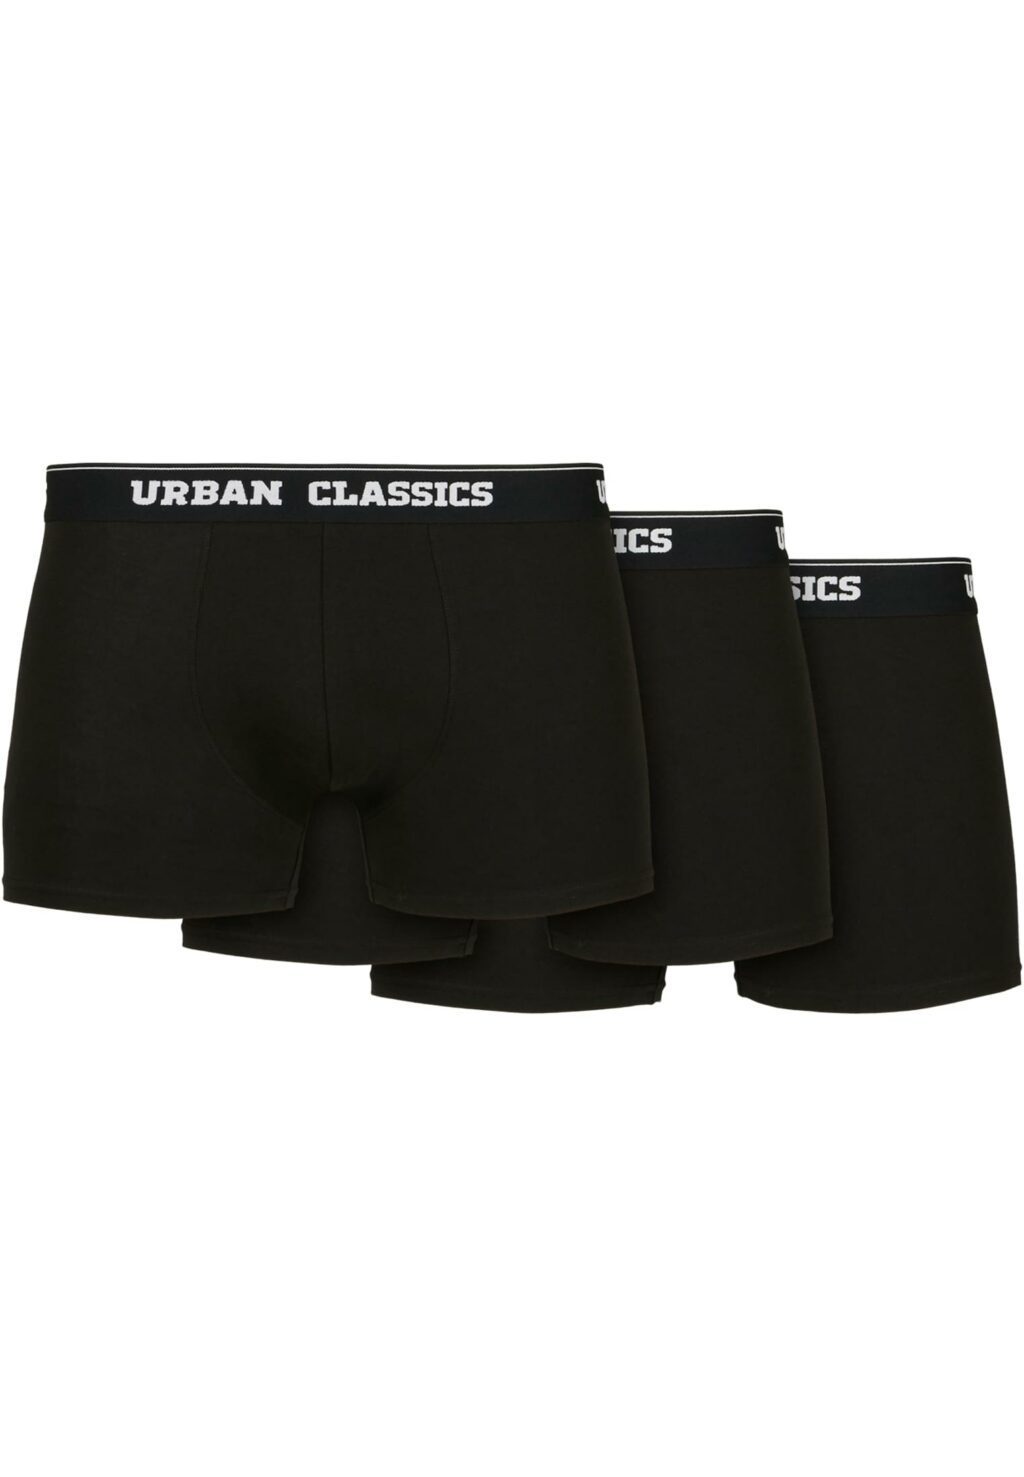 Urban Classics Organic Boxer Shorts 3-Pack black+black+black TB3838